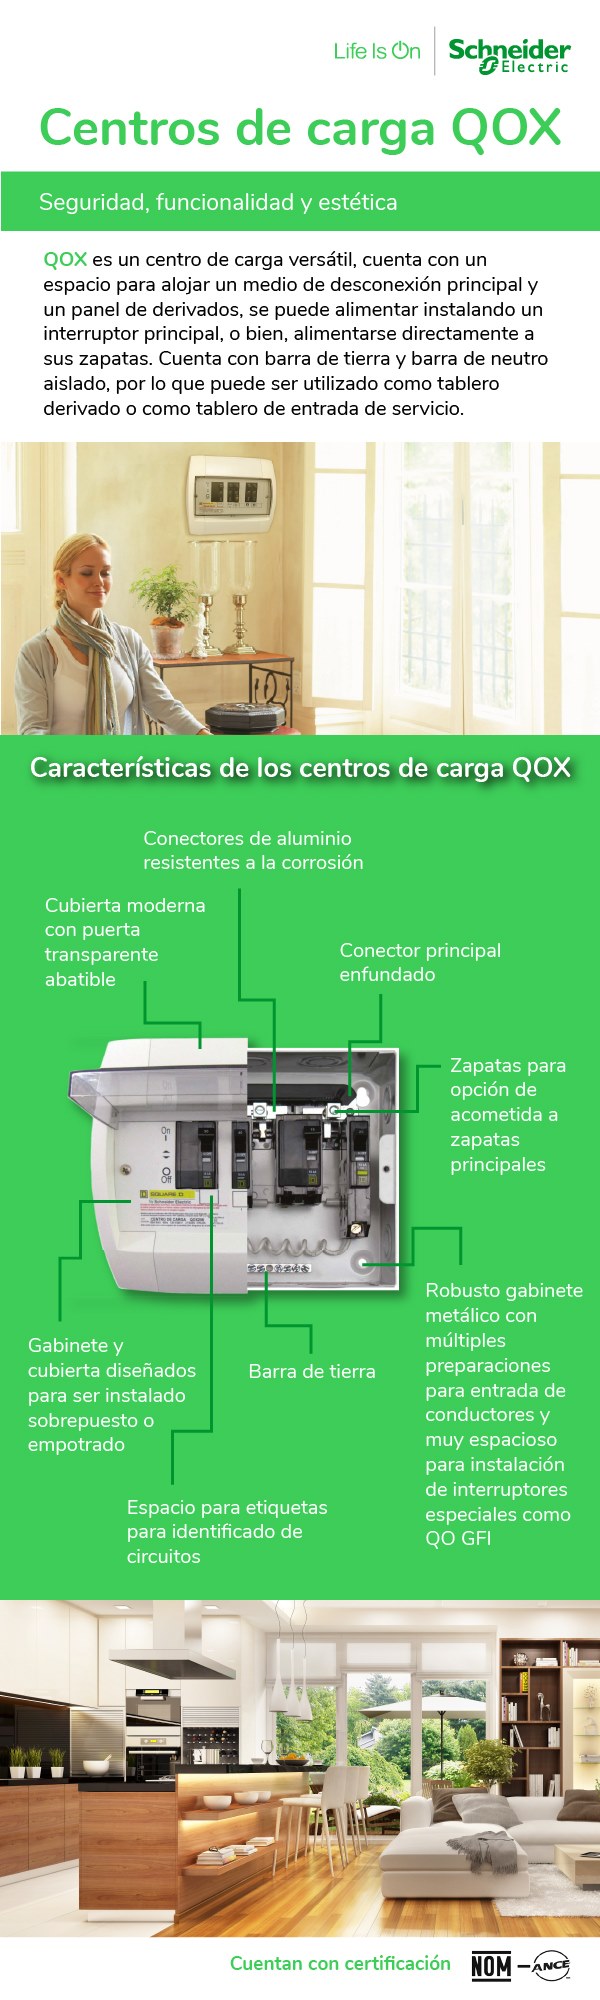 Centros de Carga QOX Schneider Electric Home Depot México